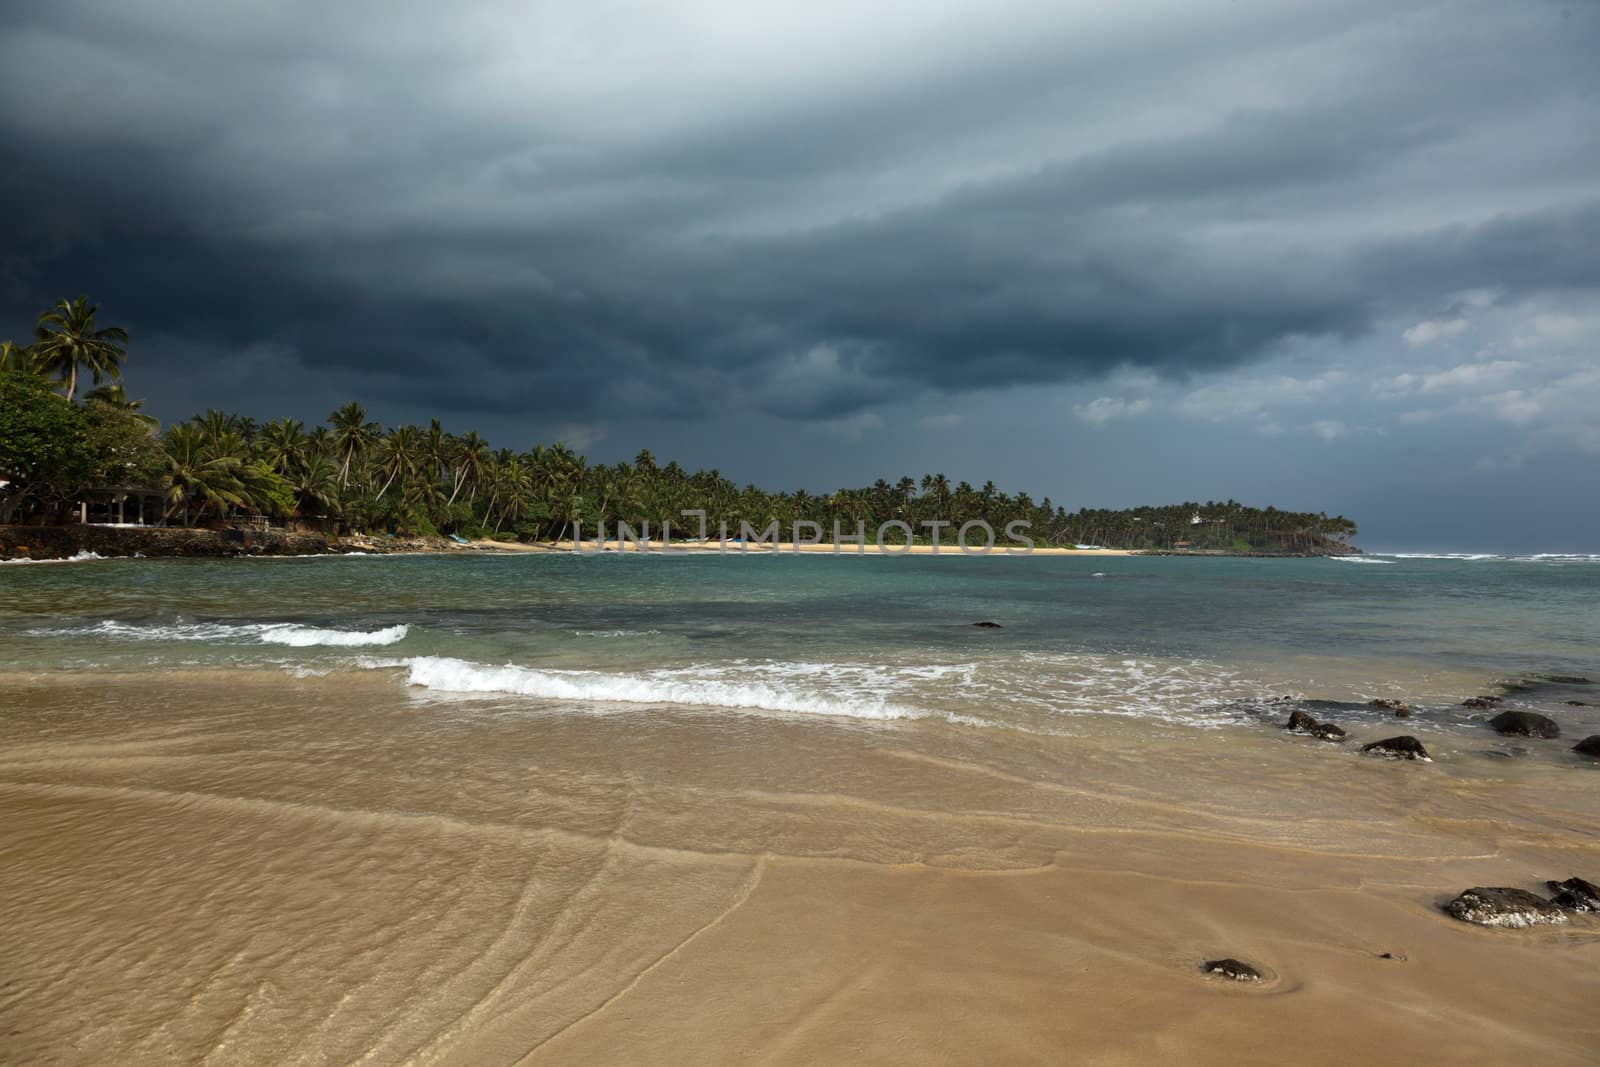 Beach before storm. Sri Lanka by dimol